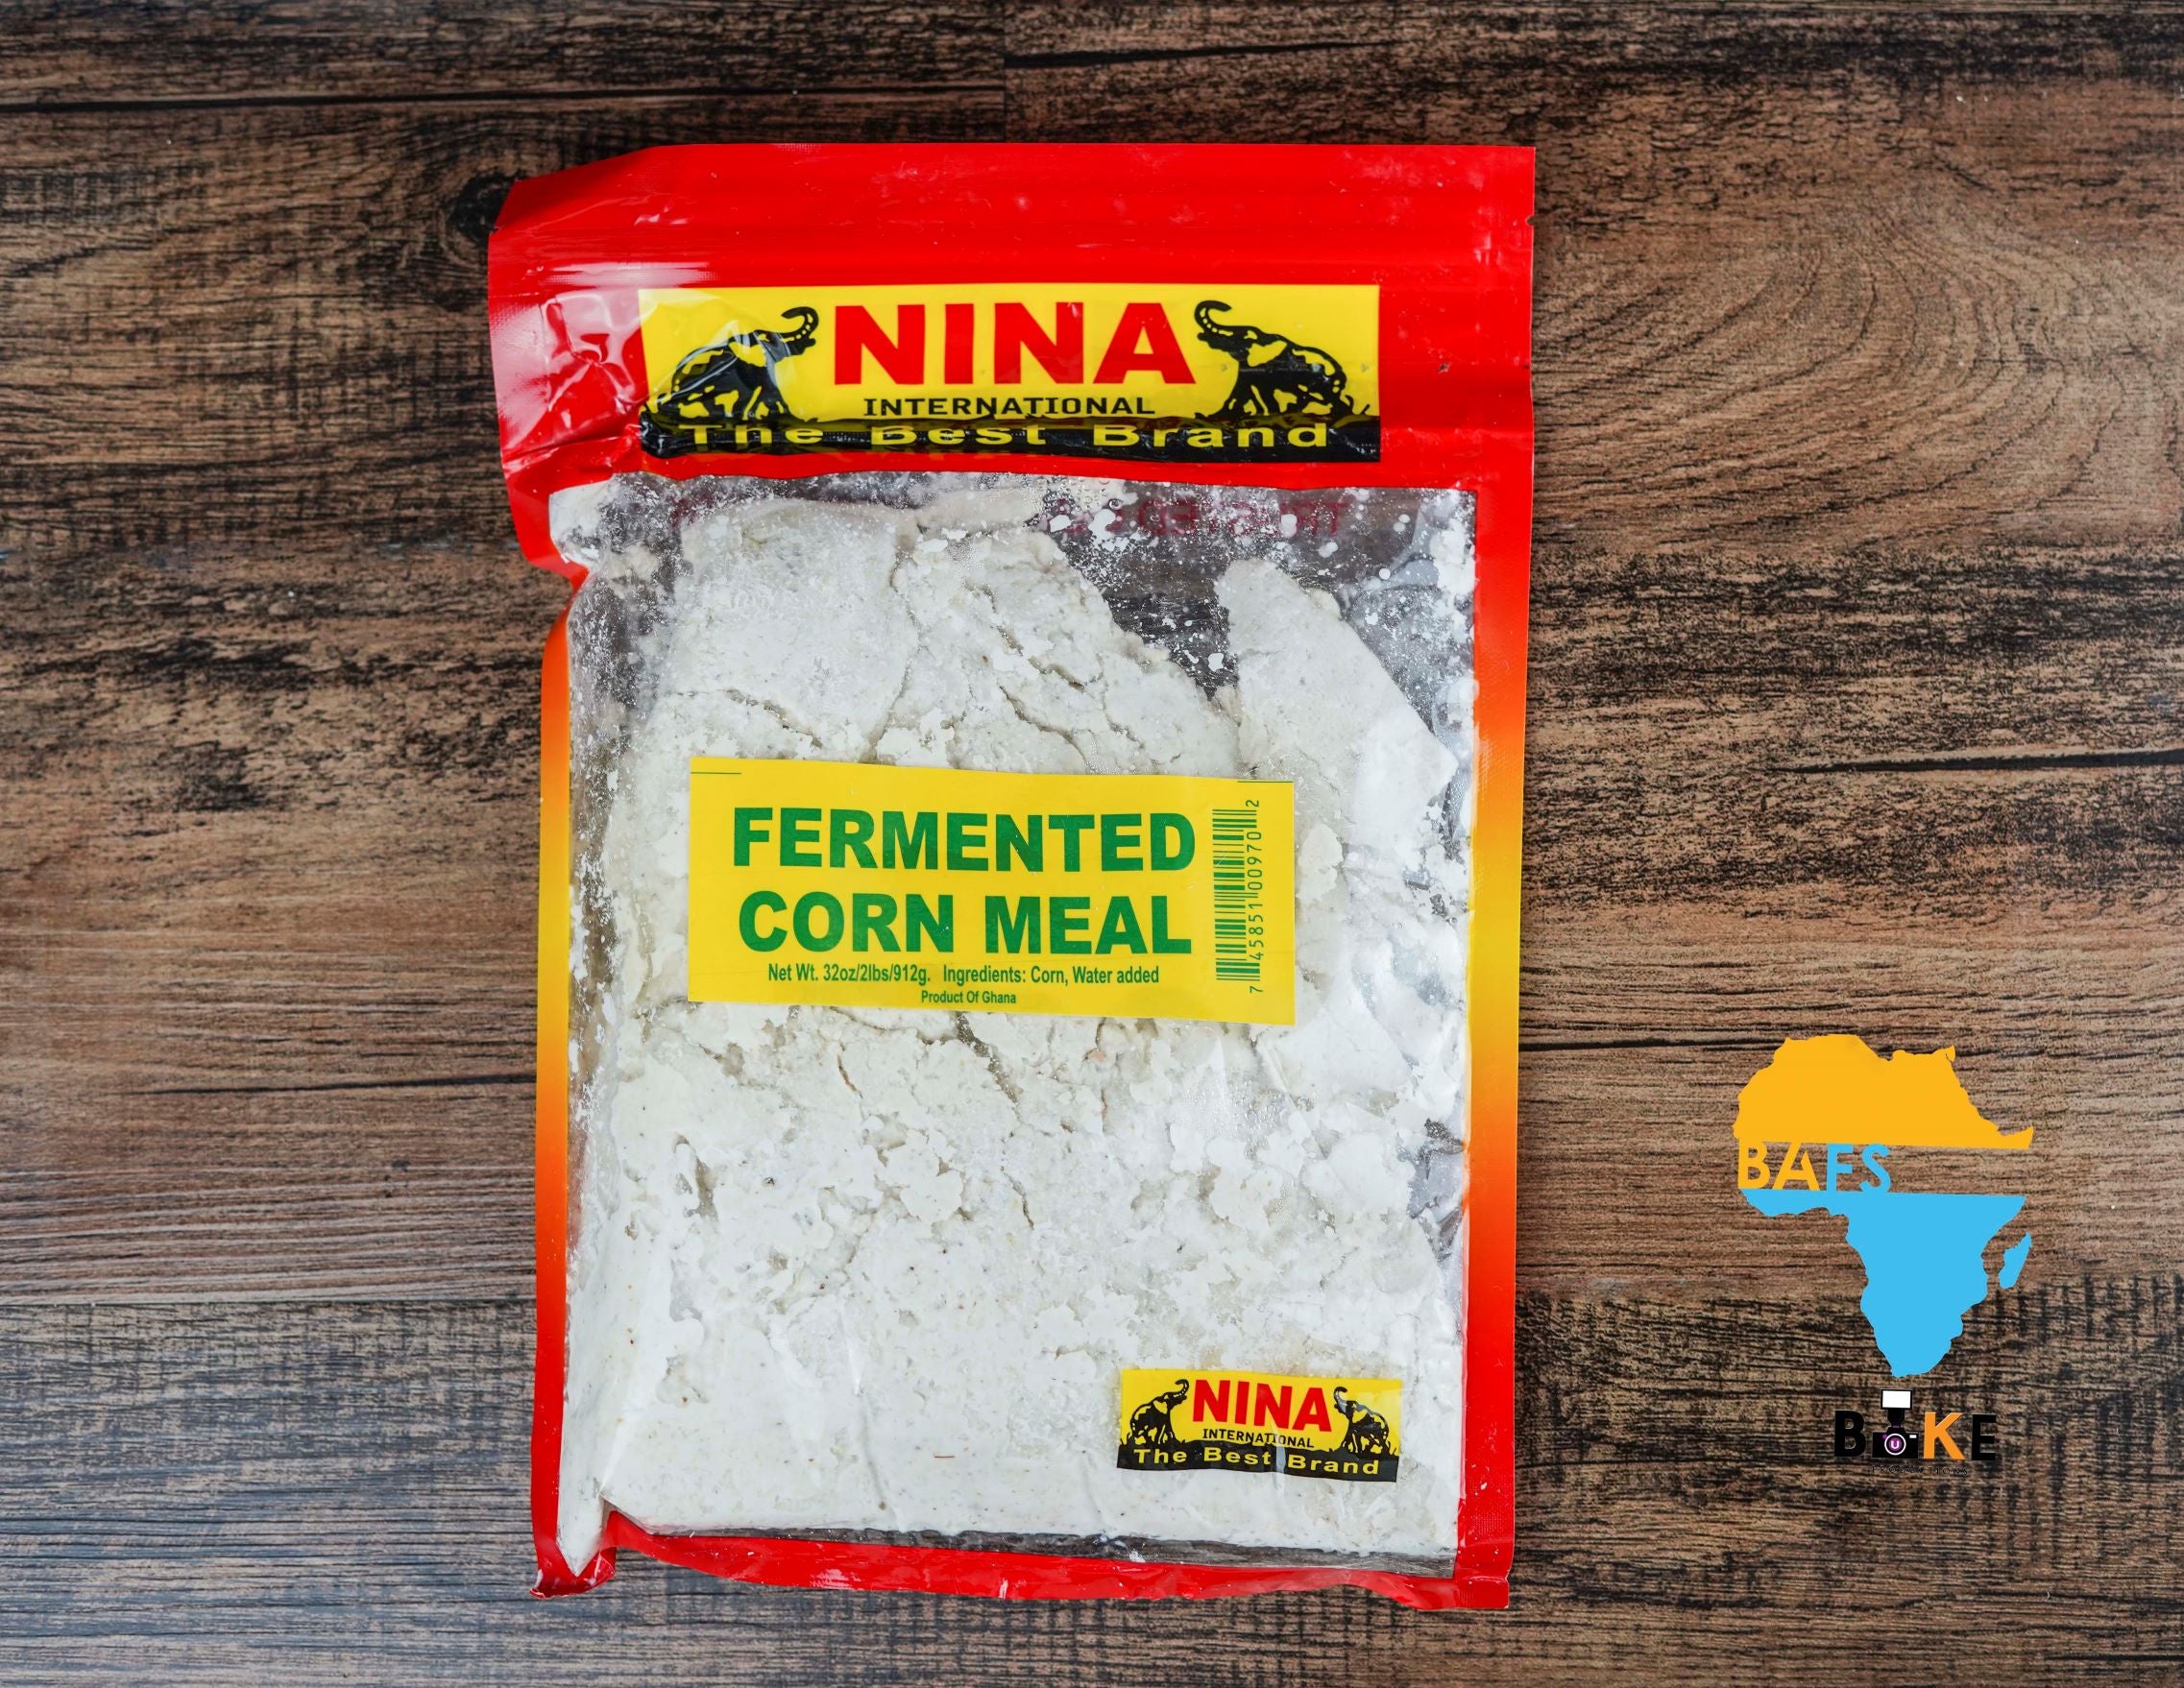 Nina International - Fermented Corn Meal